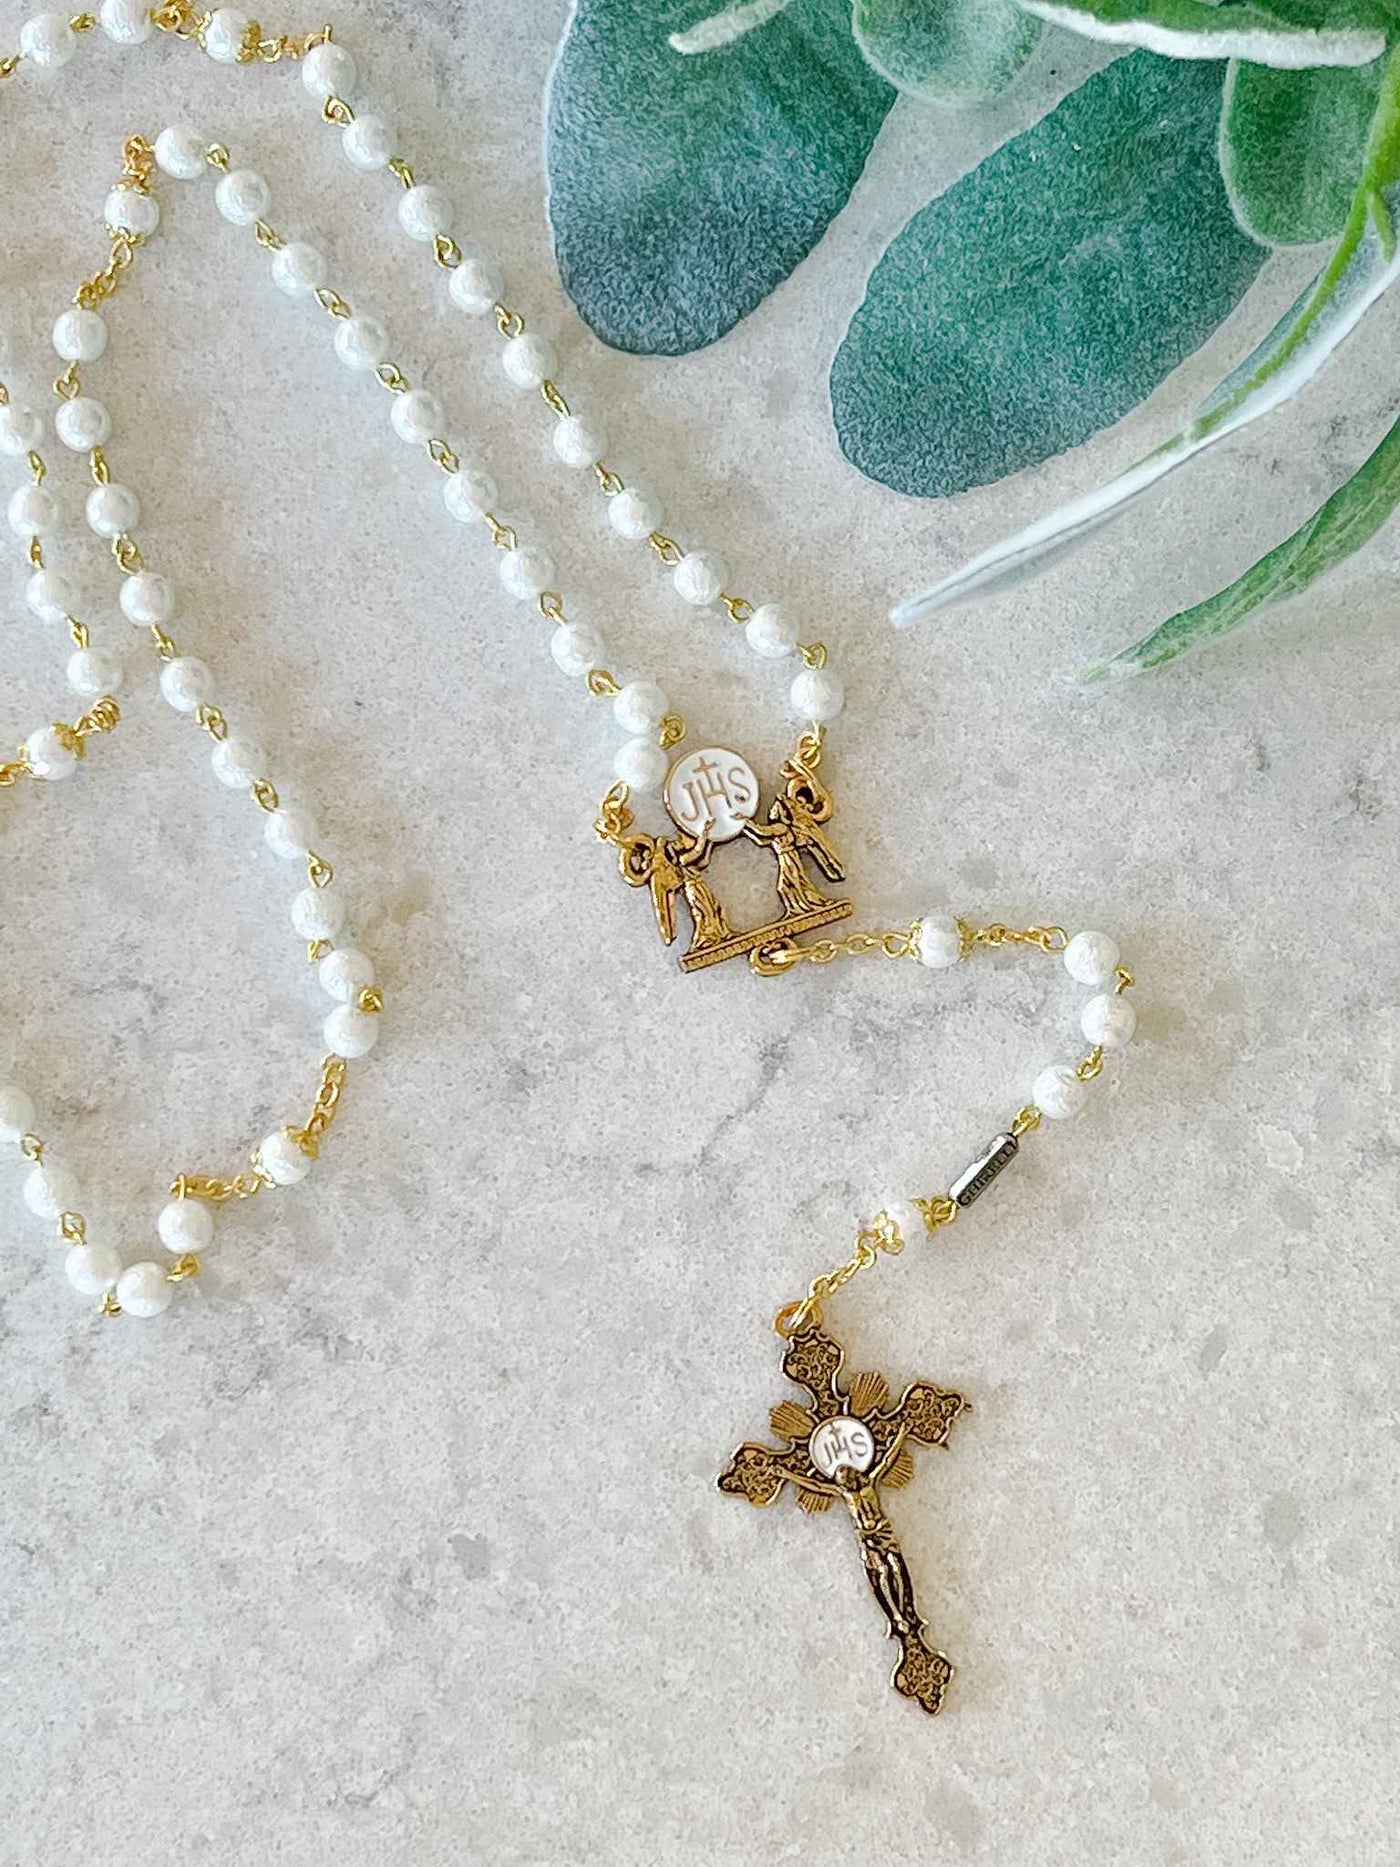 Eucharistic Rosary